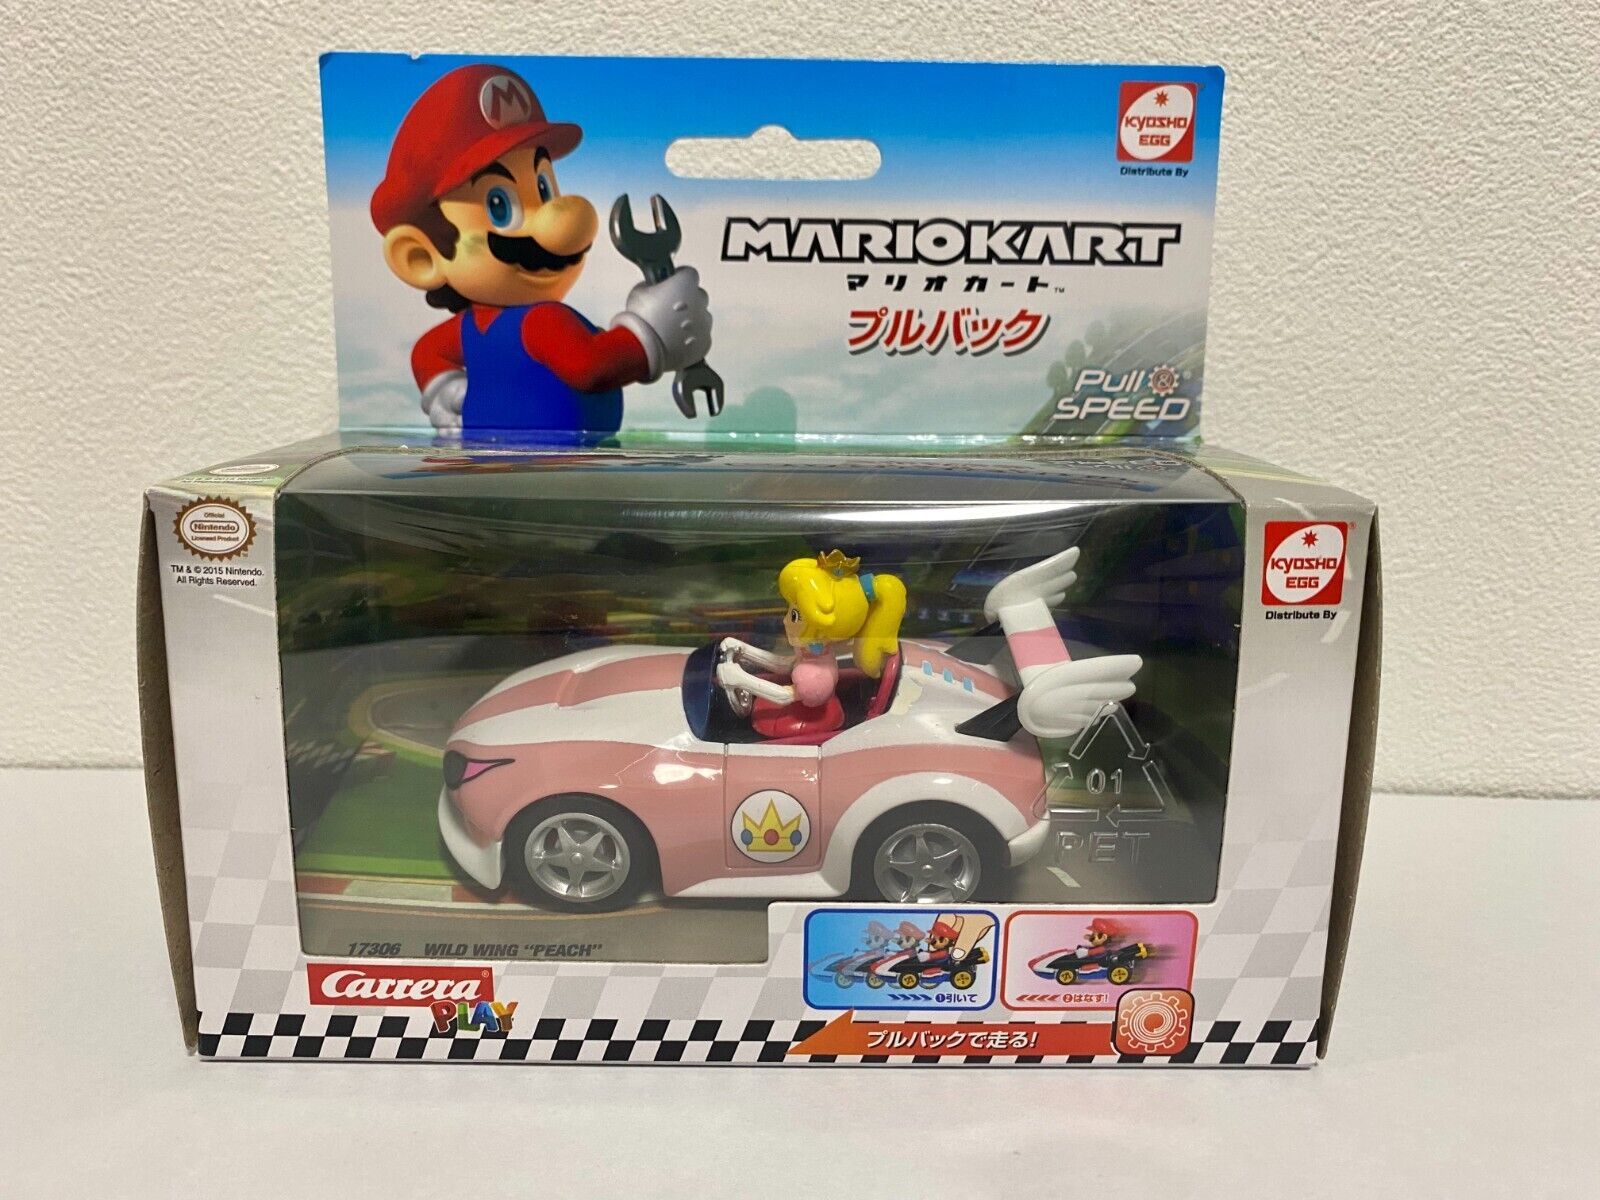 1/43 Mario Kart Pull Speed 17306 Wild Wing Peach Carrera Toys Nintendo Kyosho - $43.39